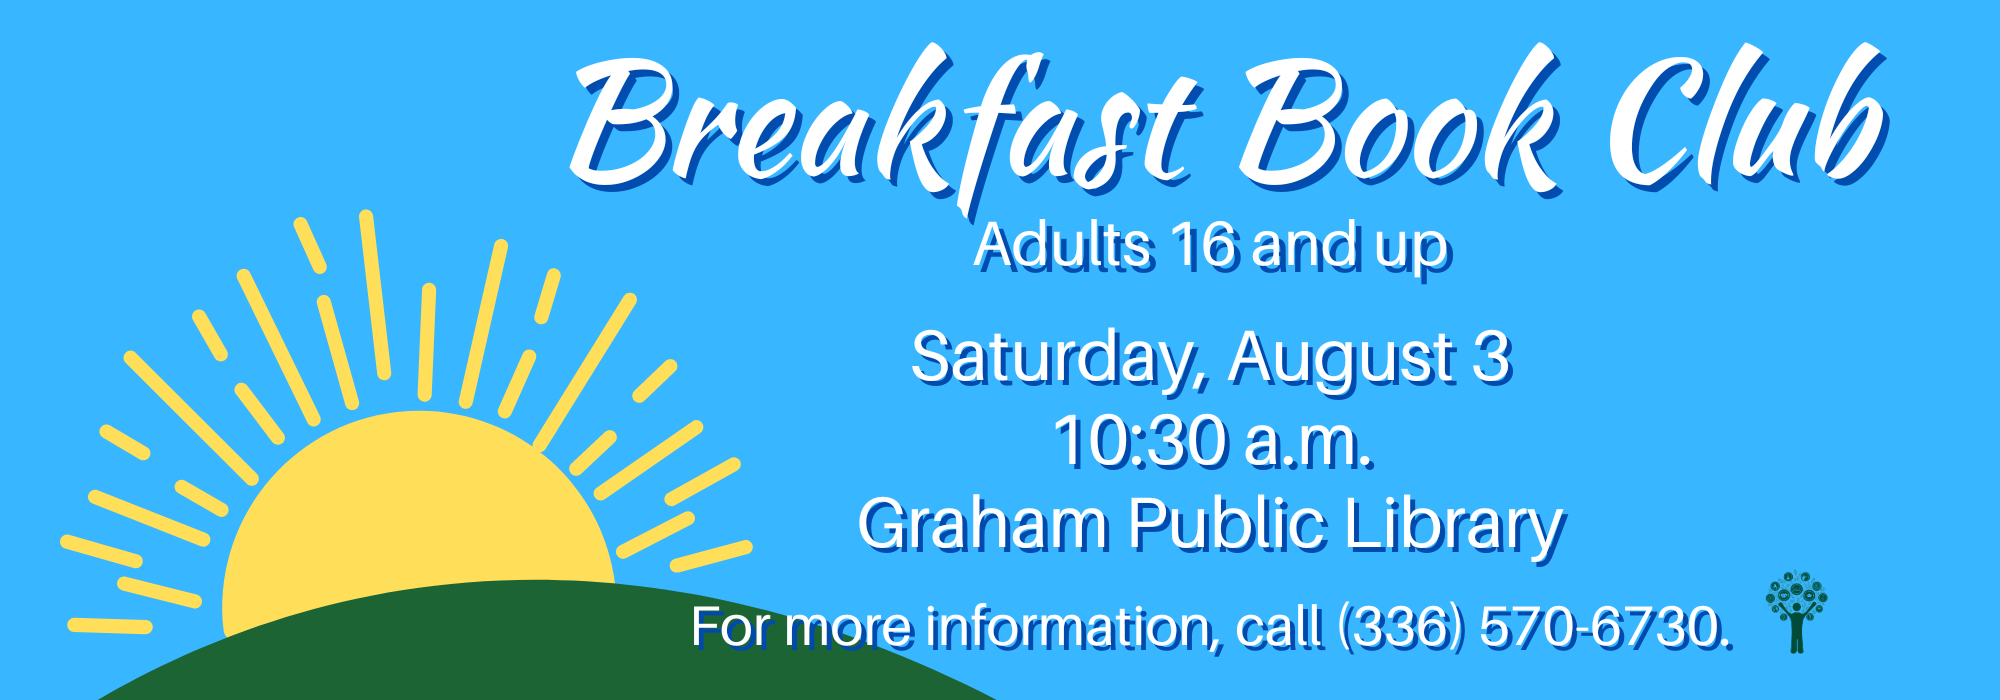 8.3 at 1030 am - Breakfast Book Club at Graham